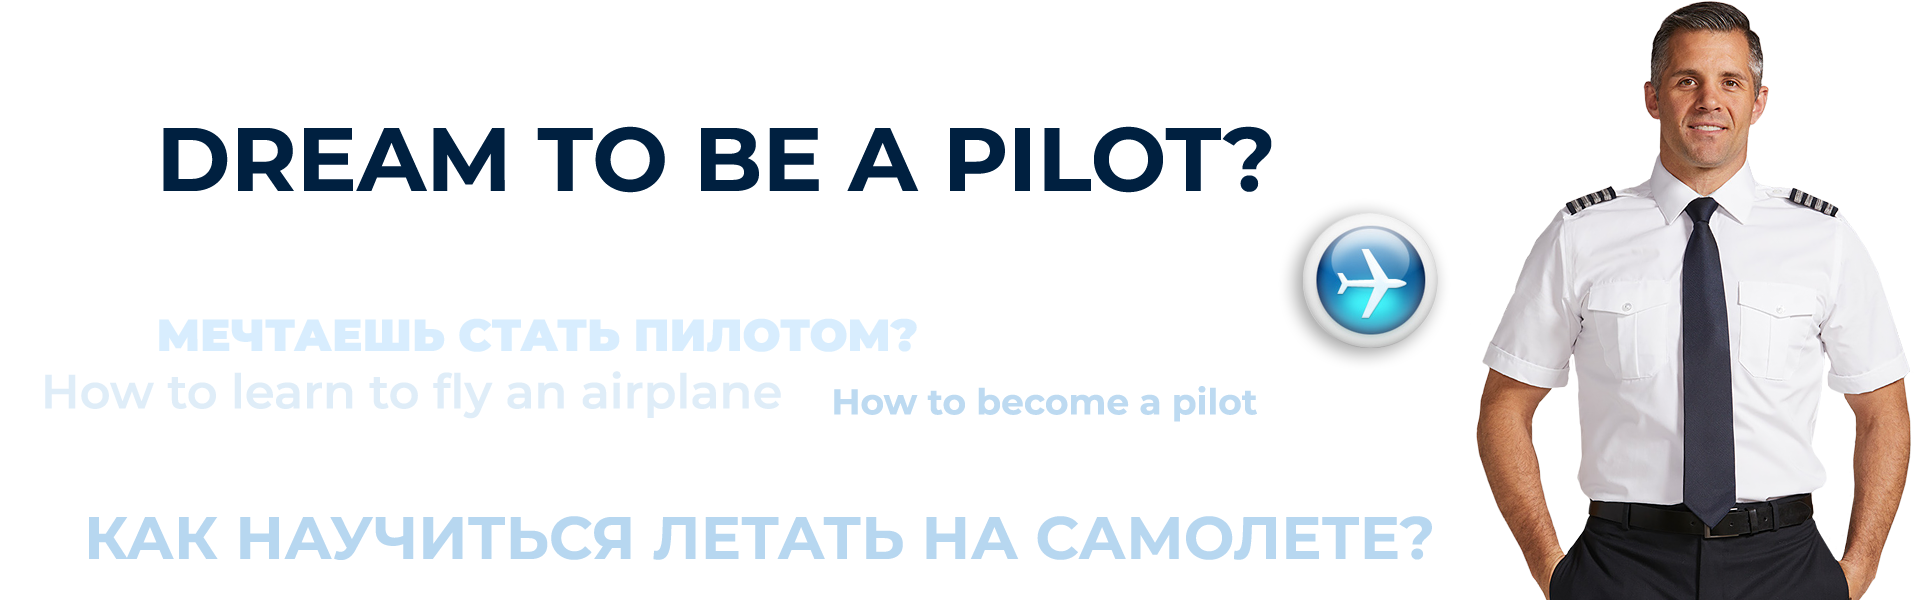 drem-to-be-a-pilot-ru.png